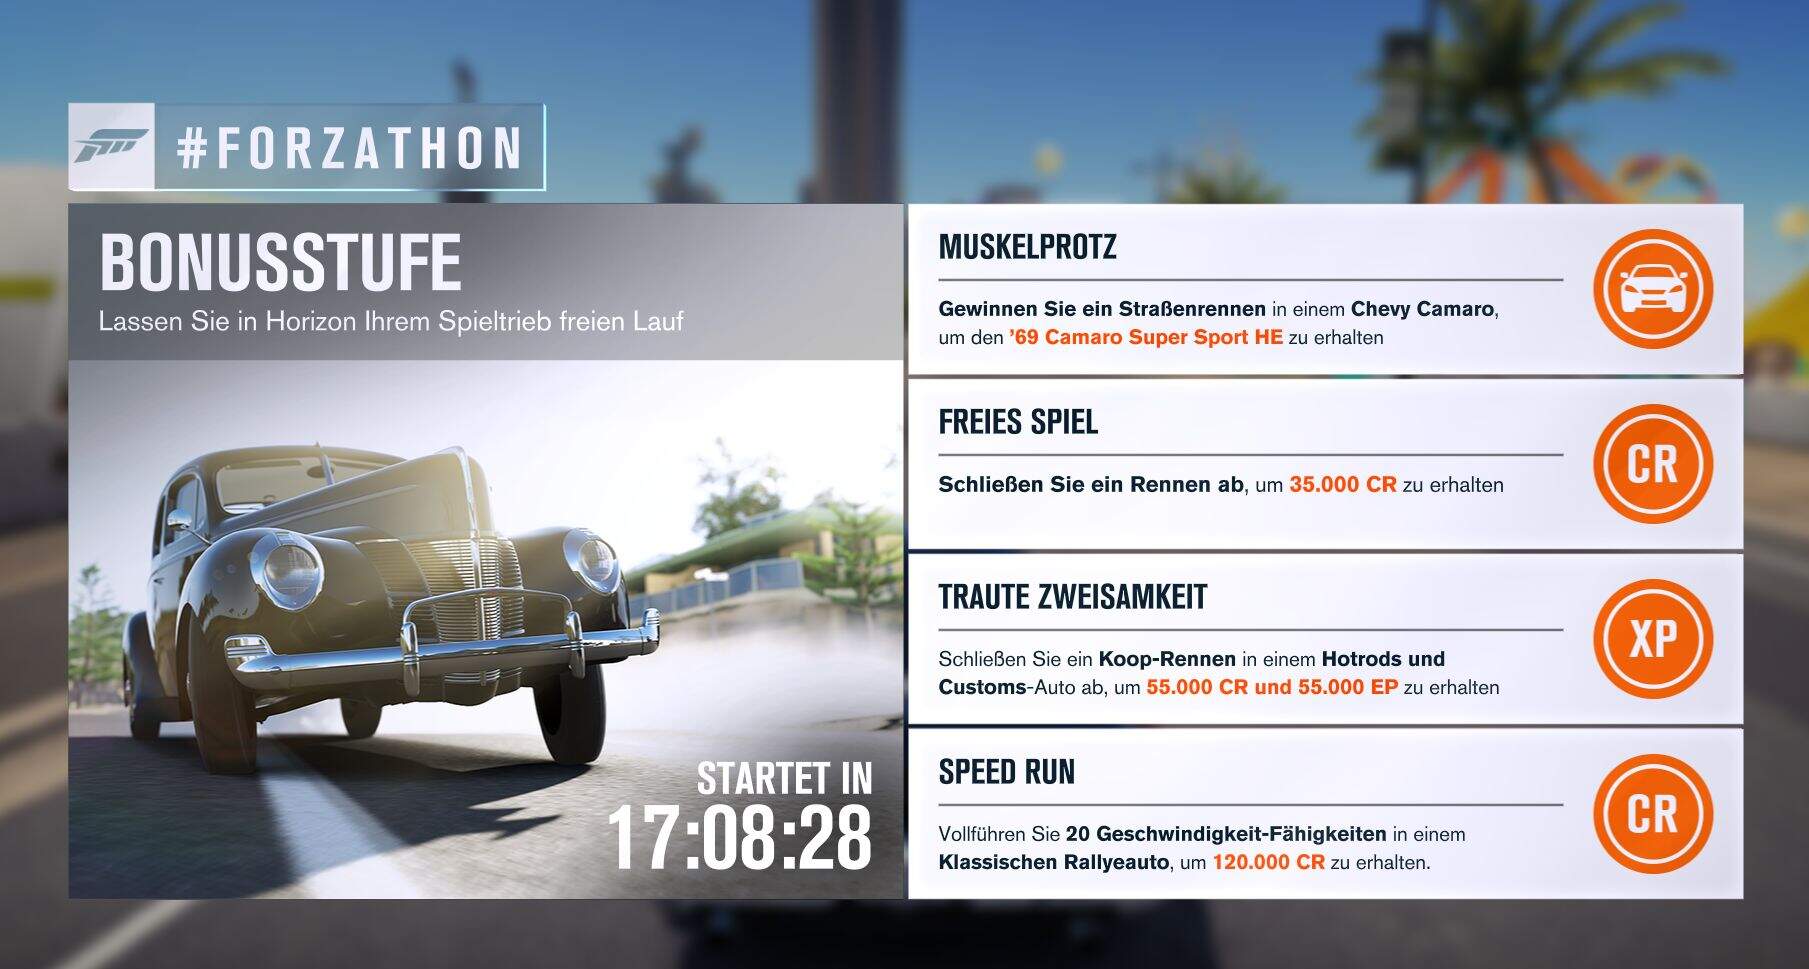 Forza Horizon 3 #Forzathon Guide KW 35 – Bonusstufe